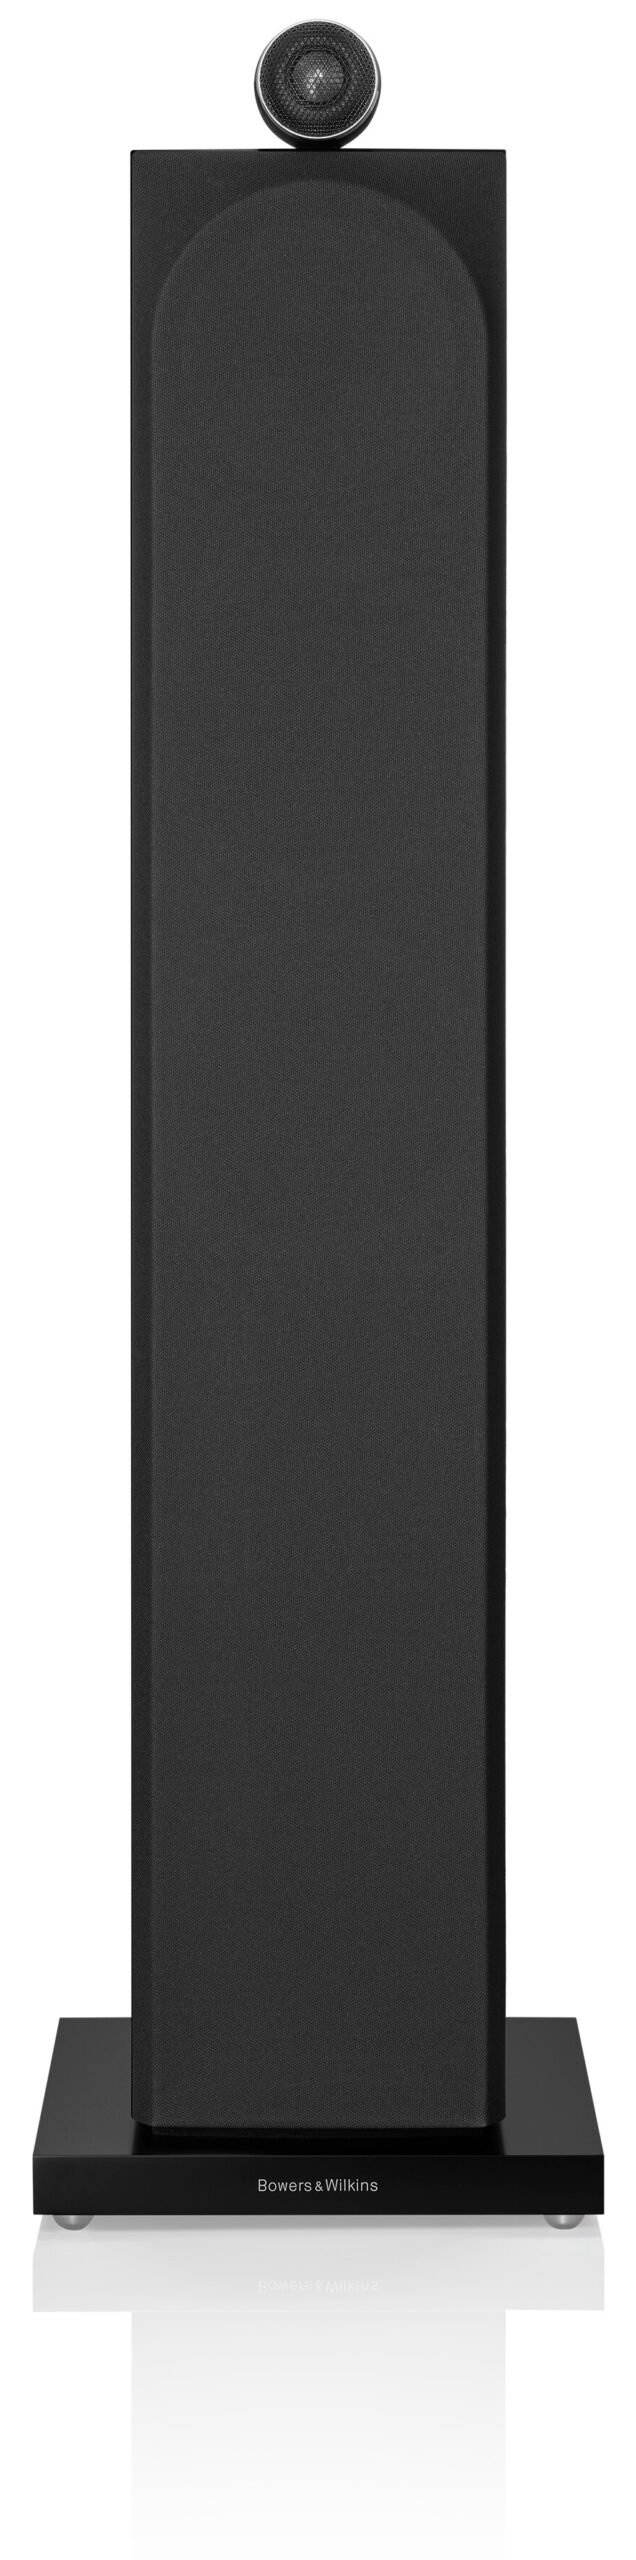 Bowers & Wilkins 703 S3 gloss black gallerij 115416